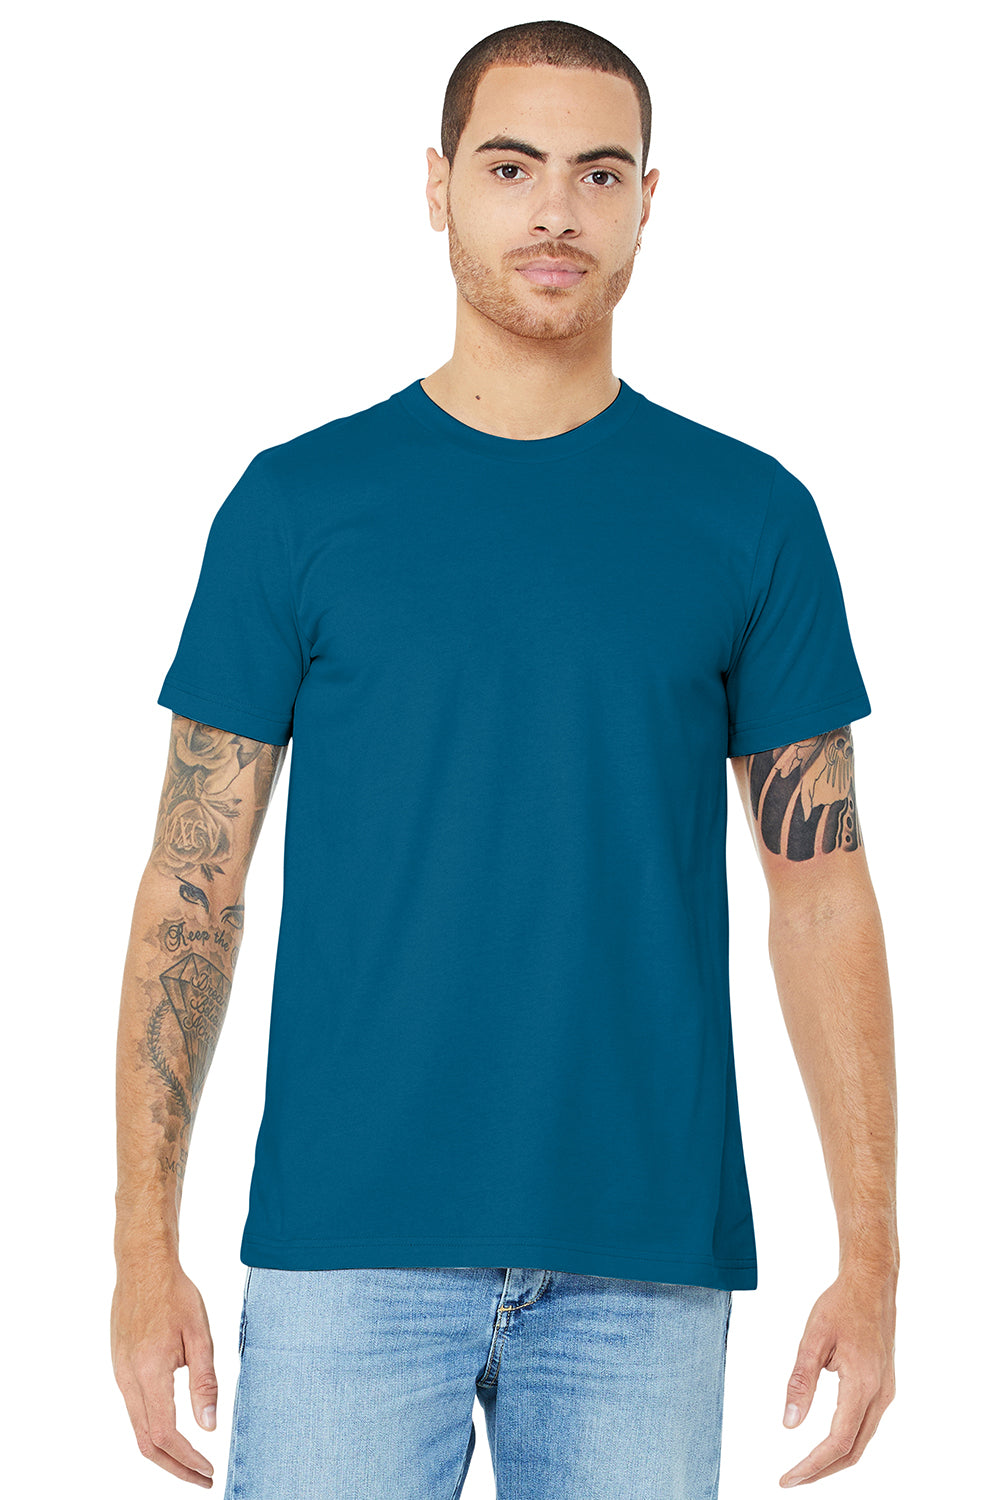 Bella + Canvas BC3001/3001C Mens Jersey Short Sleeve Crewneck T-Shirt Deep Teal Blue Model Front